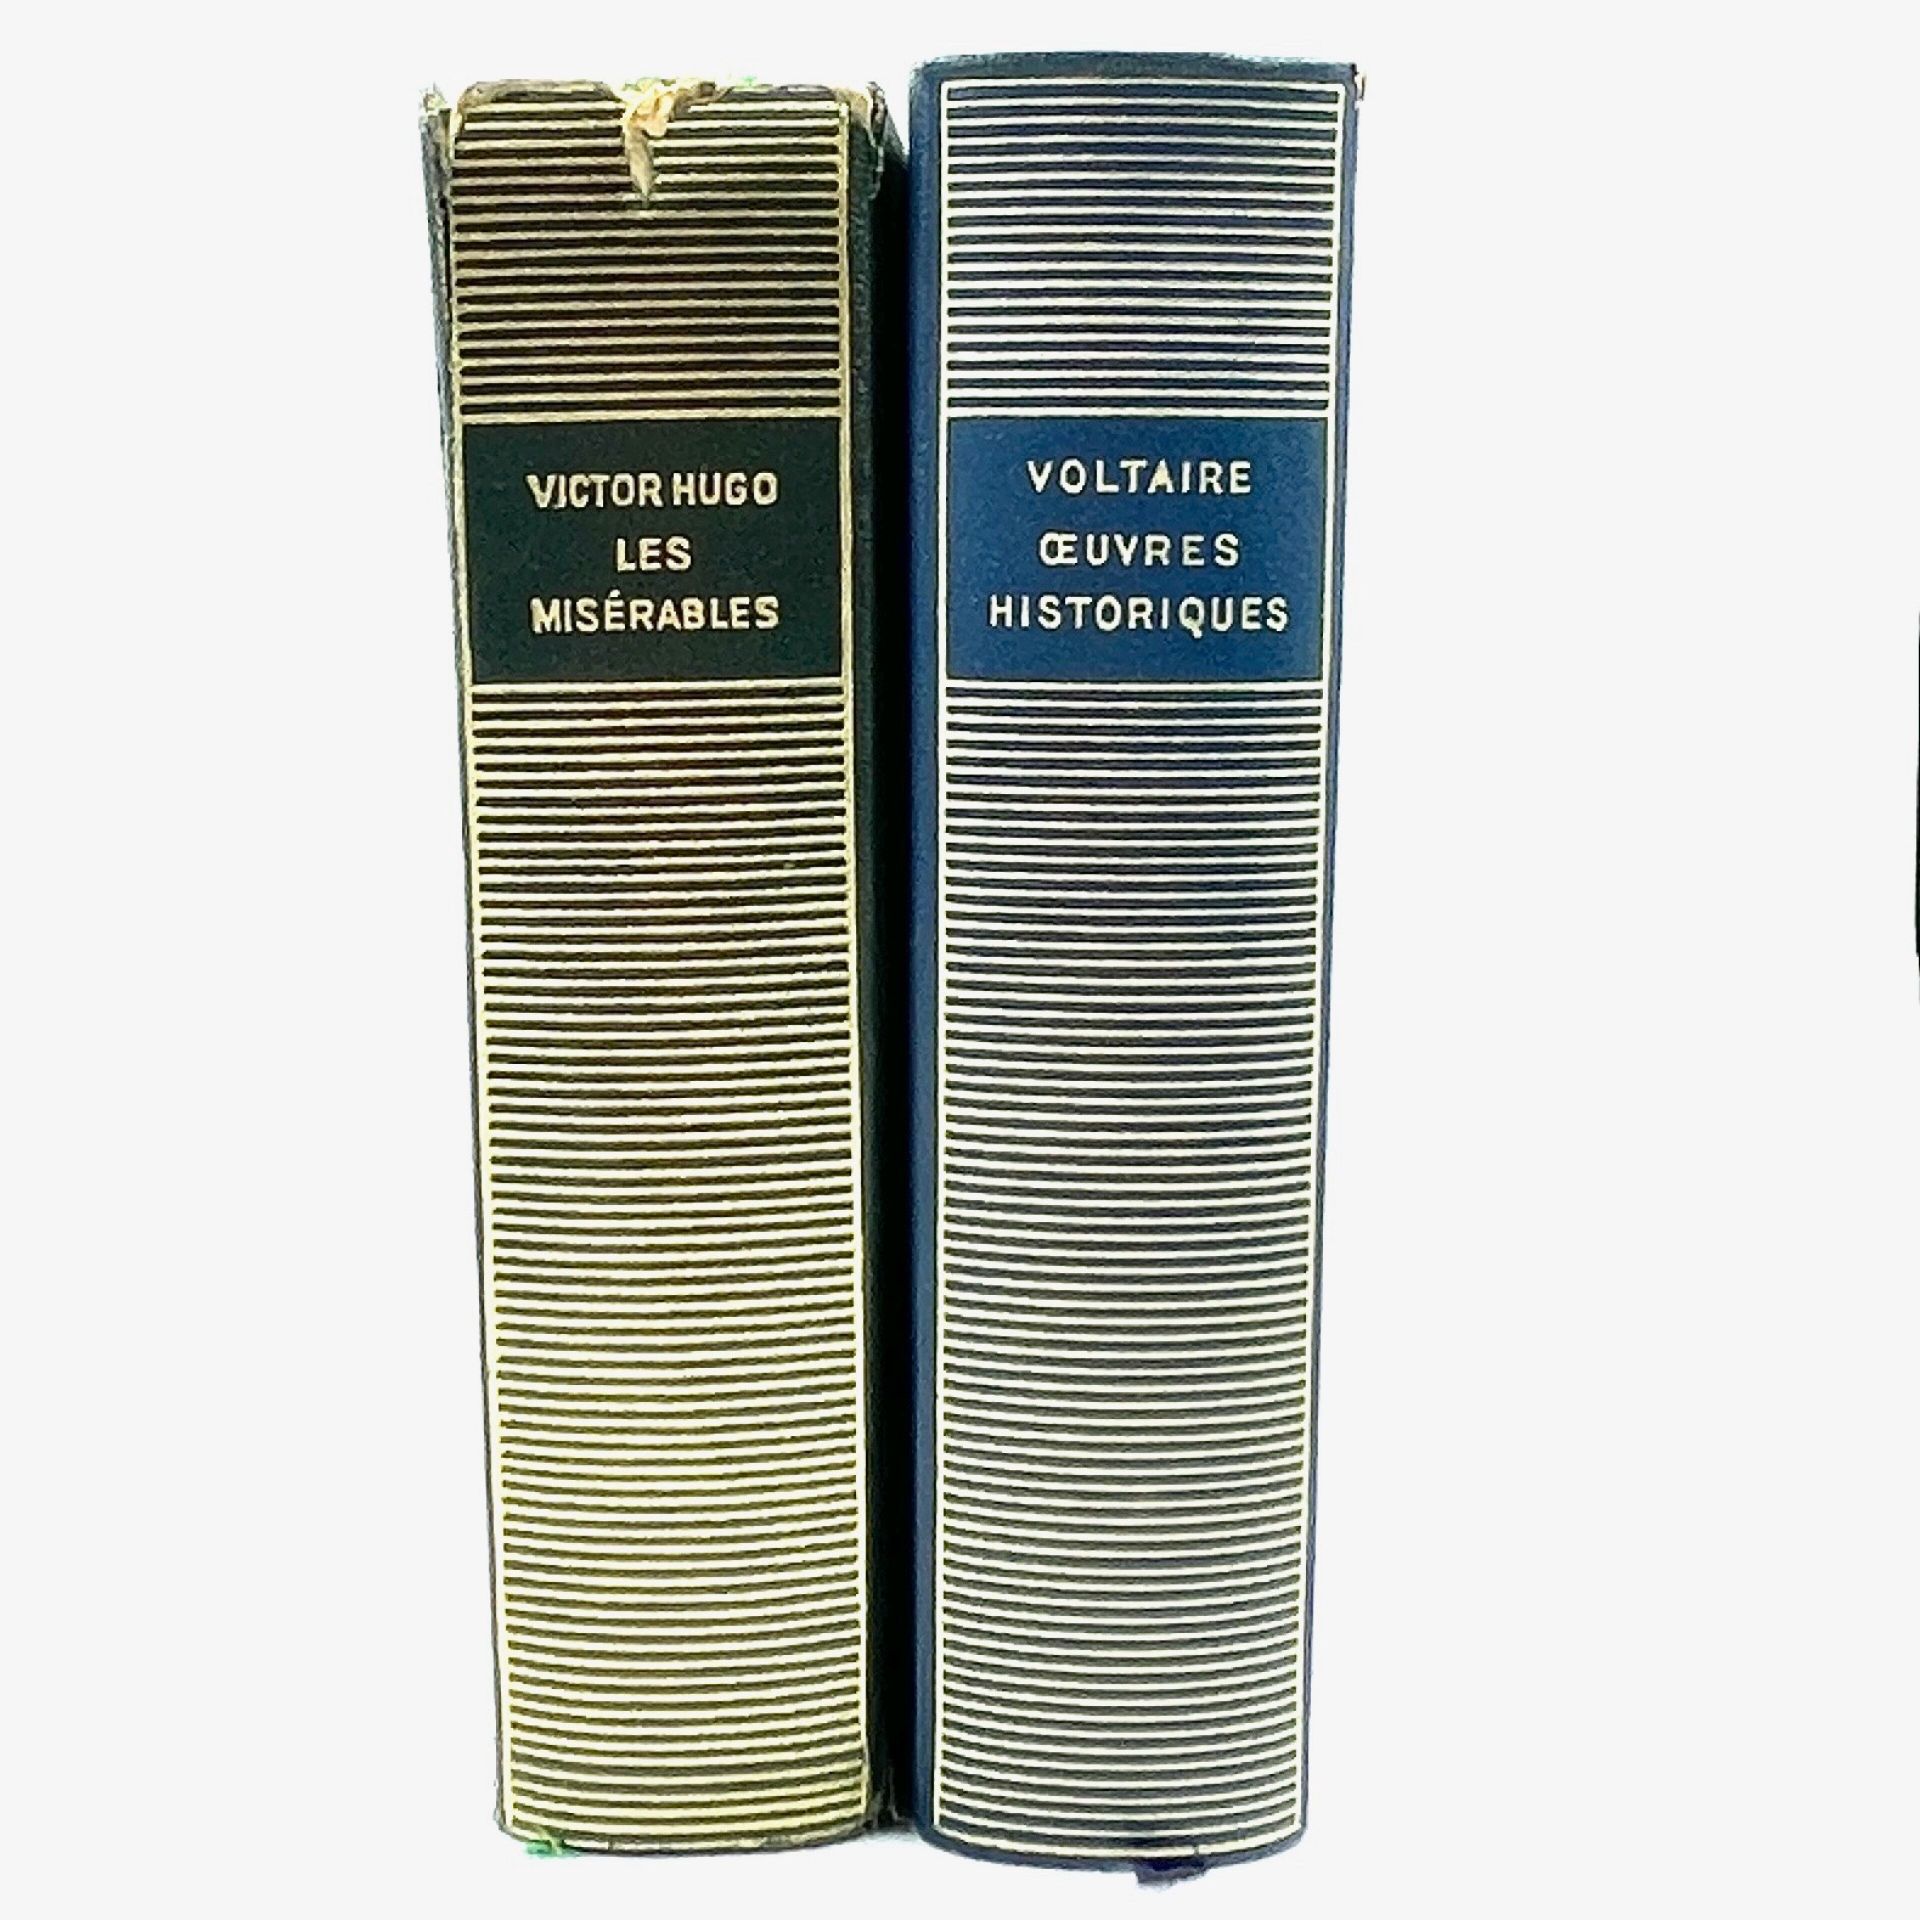 Null Victor HUGO and VOLTAIRE - BIBLIOTHÈQUE DE LA PLÉIADE 
Set of 2 books: 
- V&hellip;